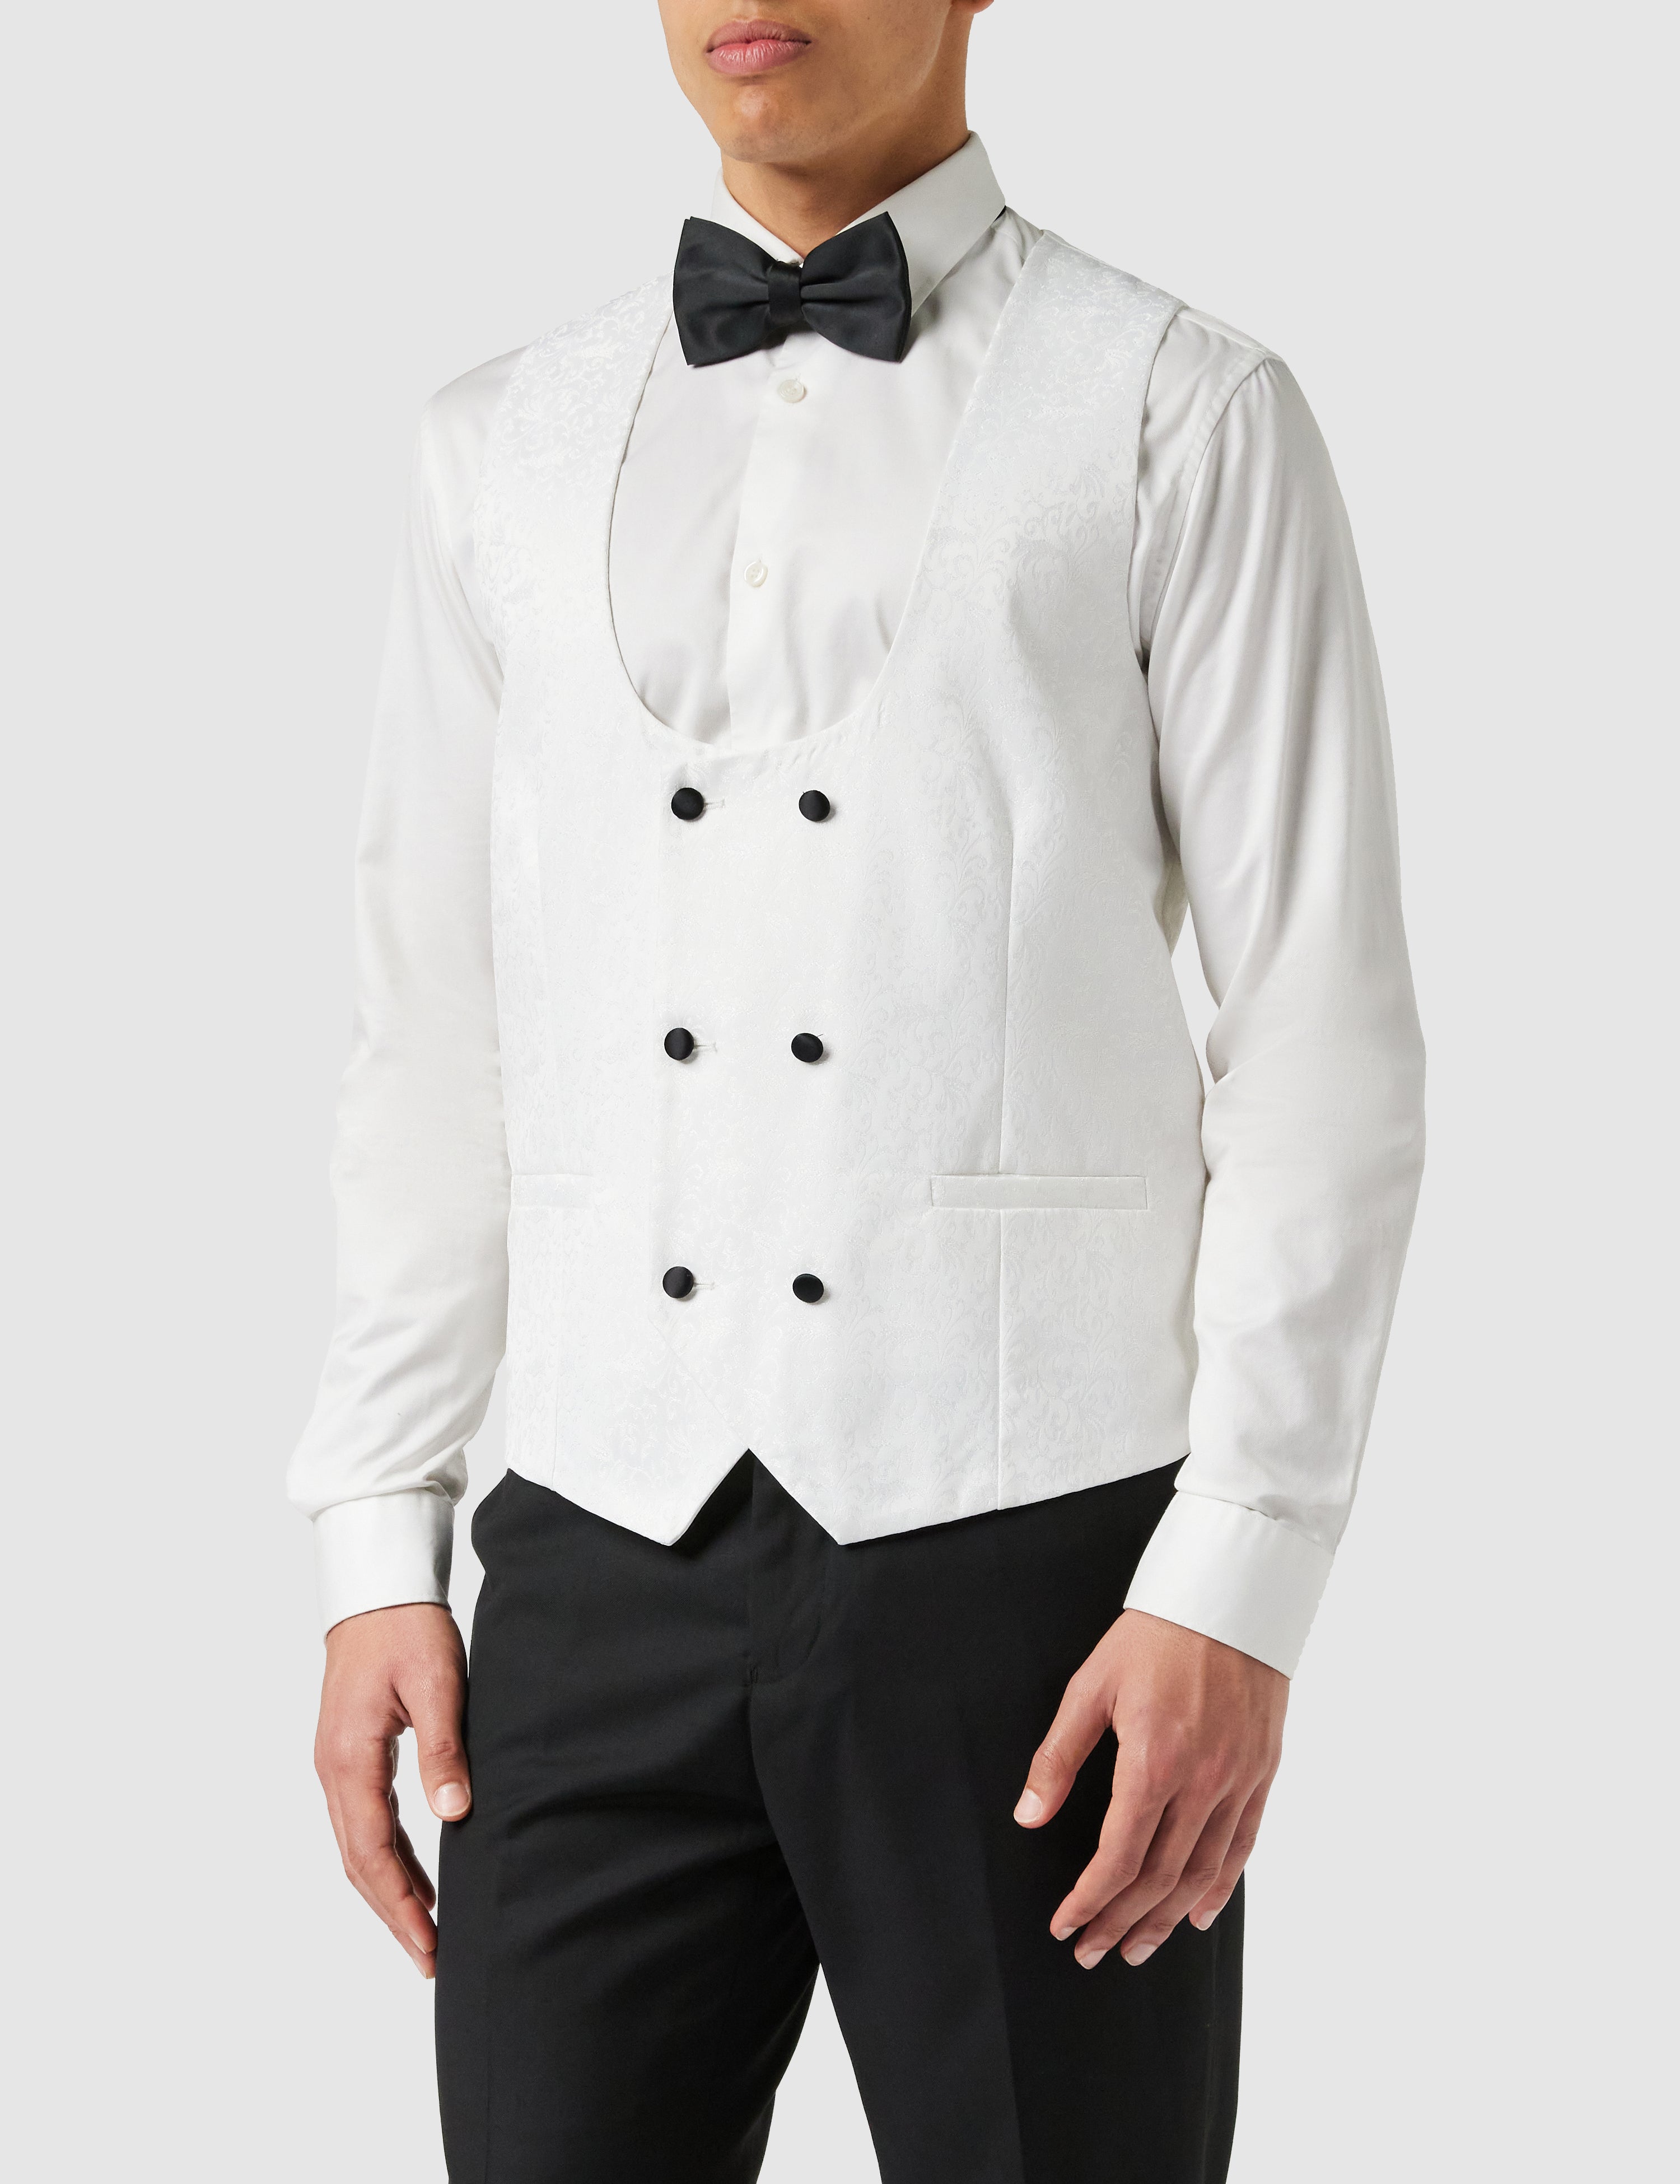 BRIAN - Floral Jacquard Print White Tuxedo Jacket With Waistcoat